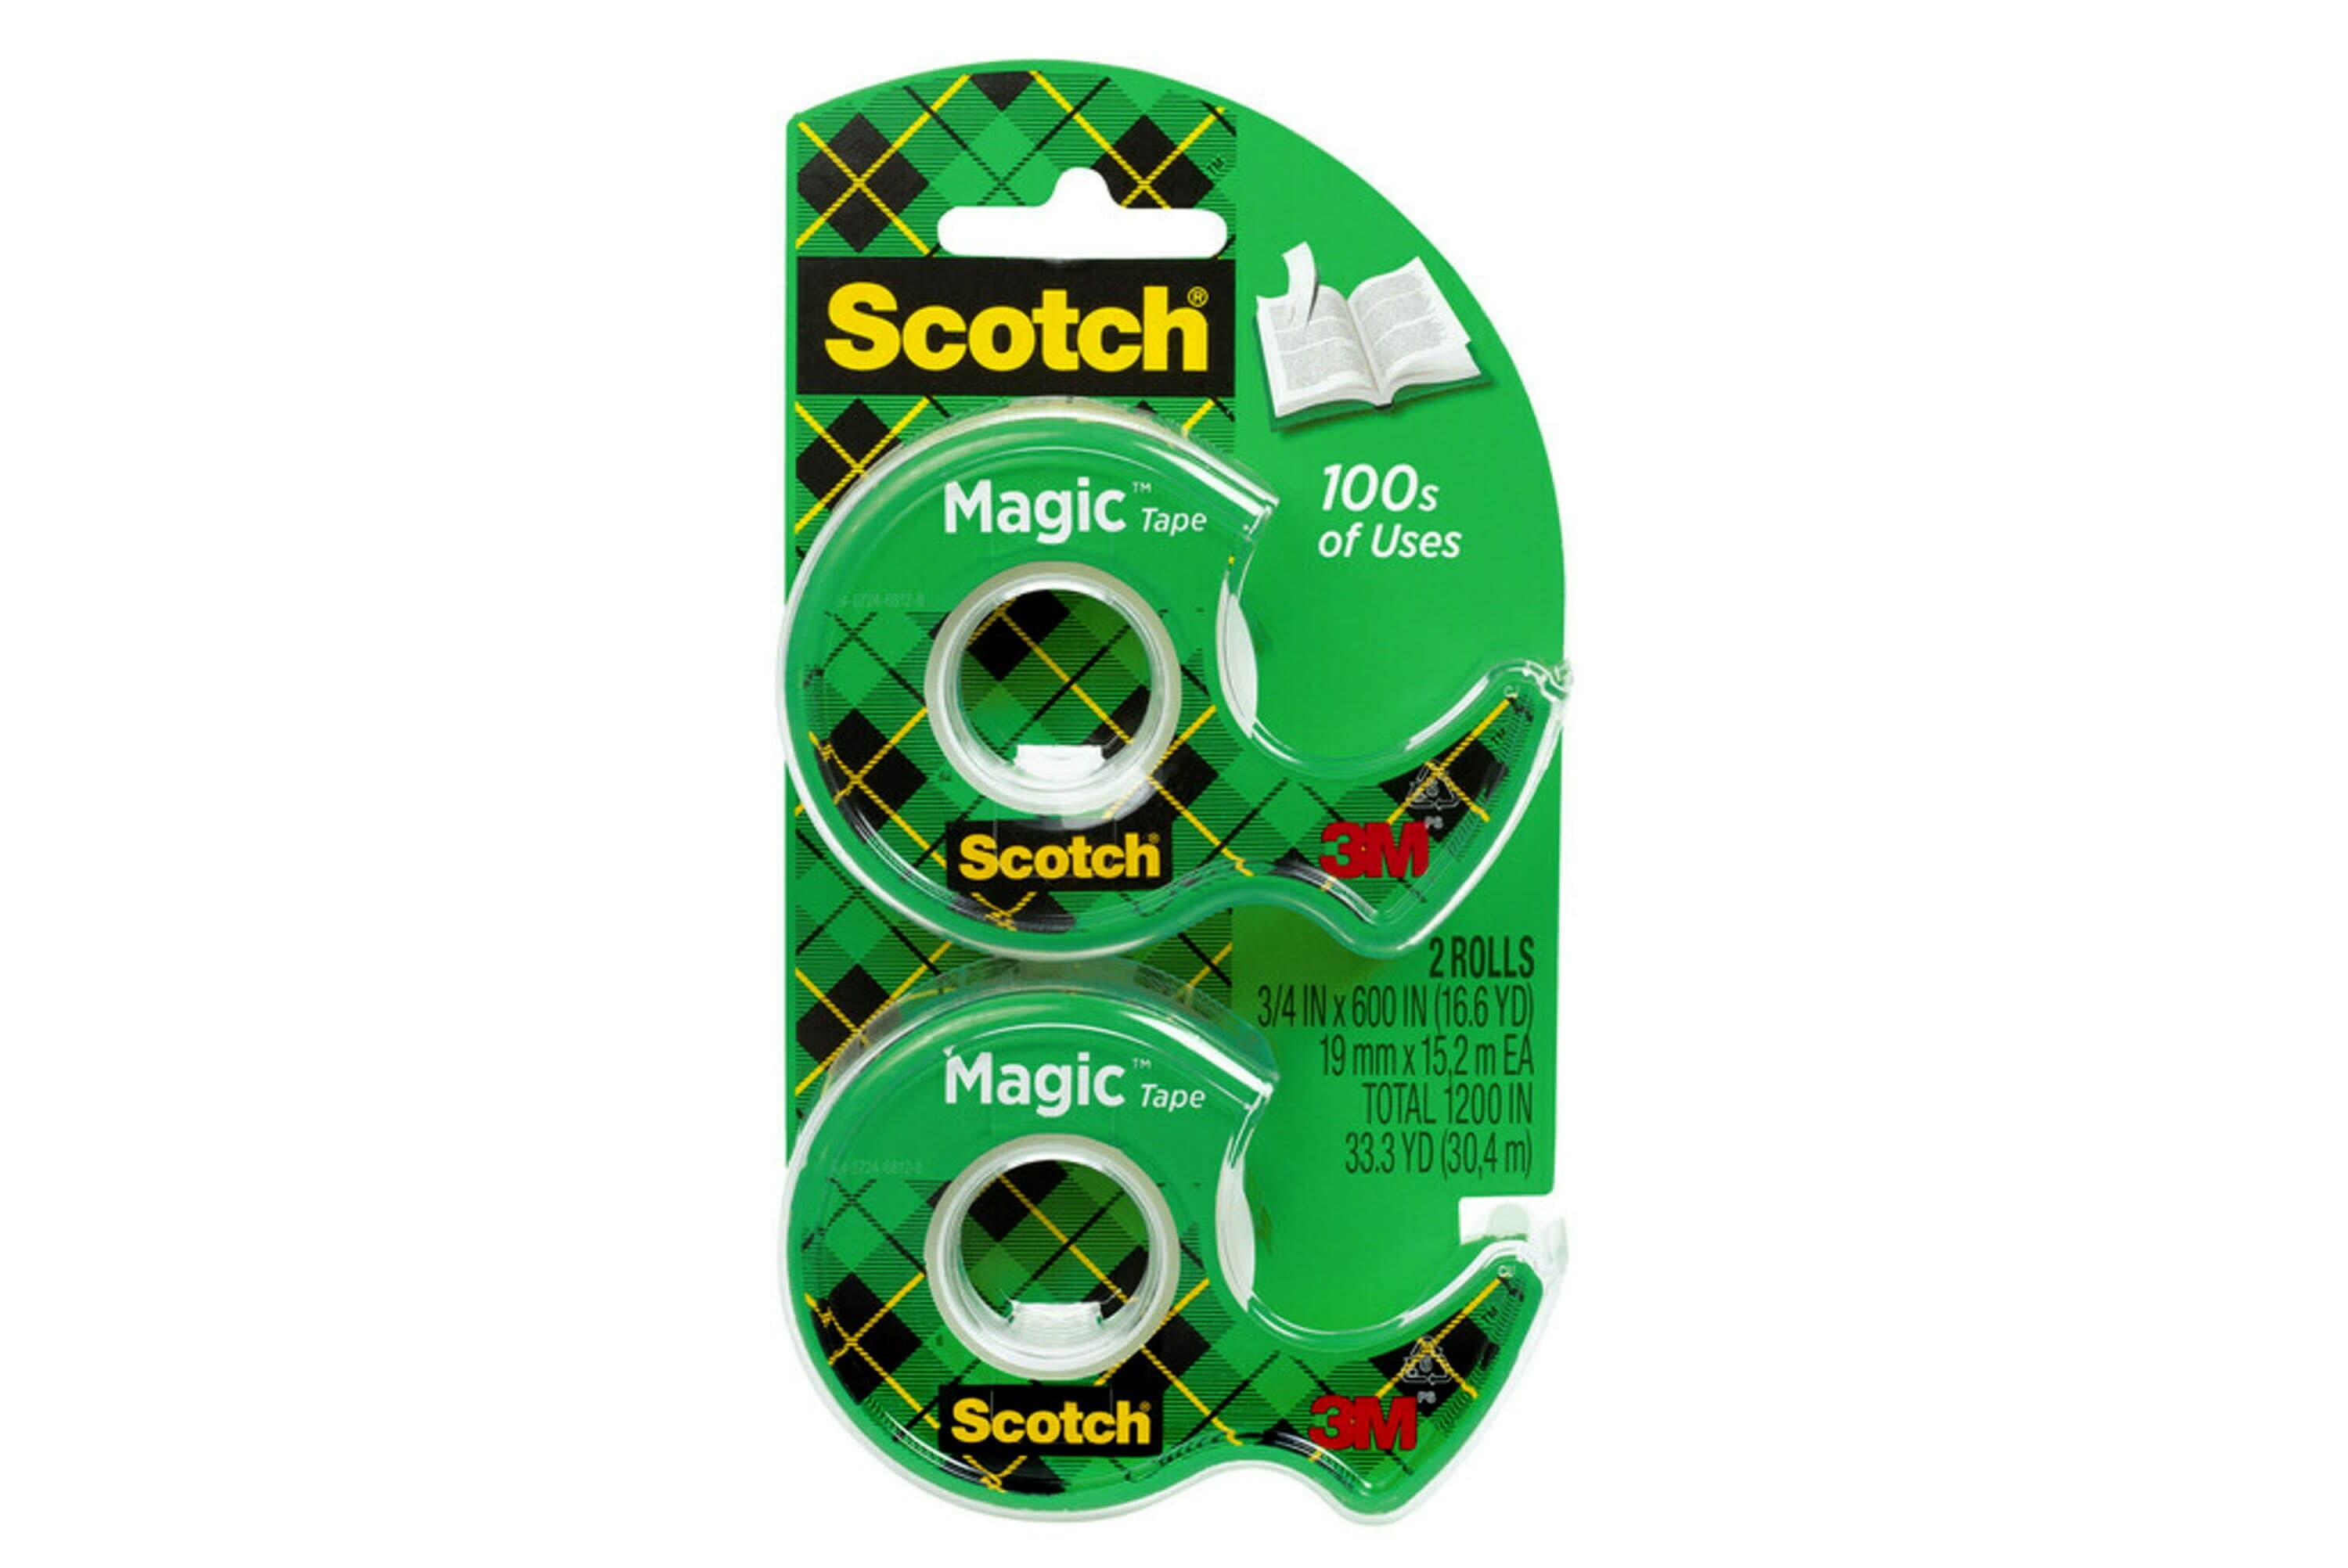 Scotch Magic Tape in Refillable Dispensers